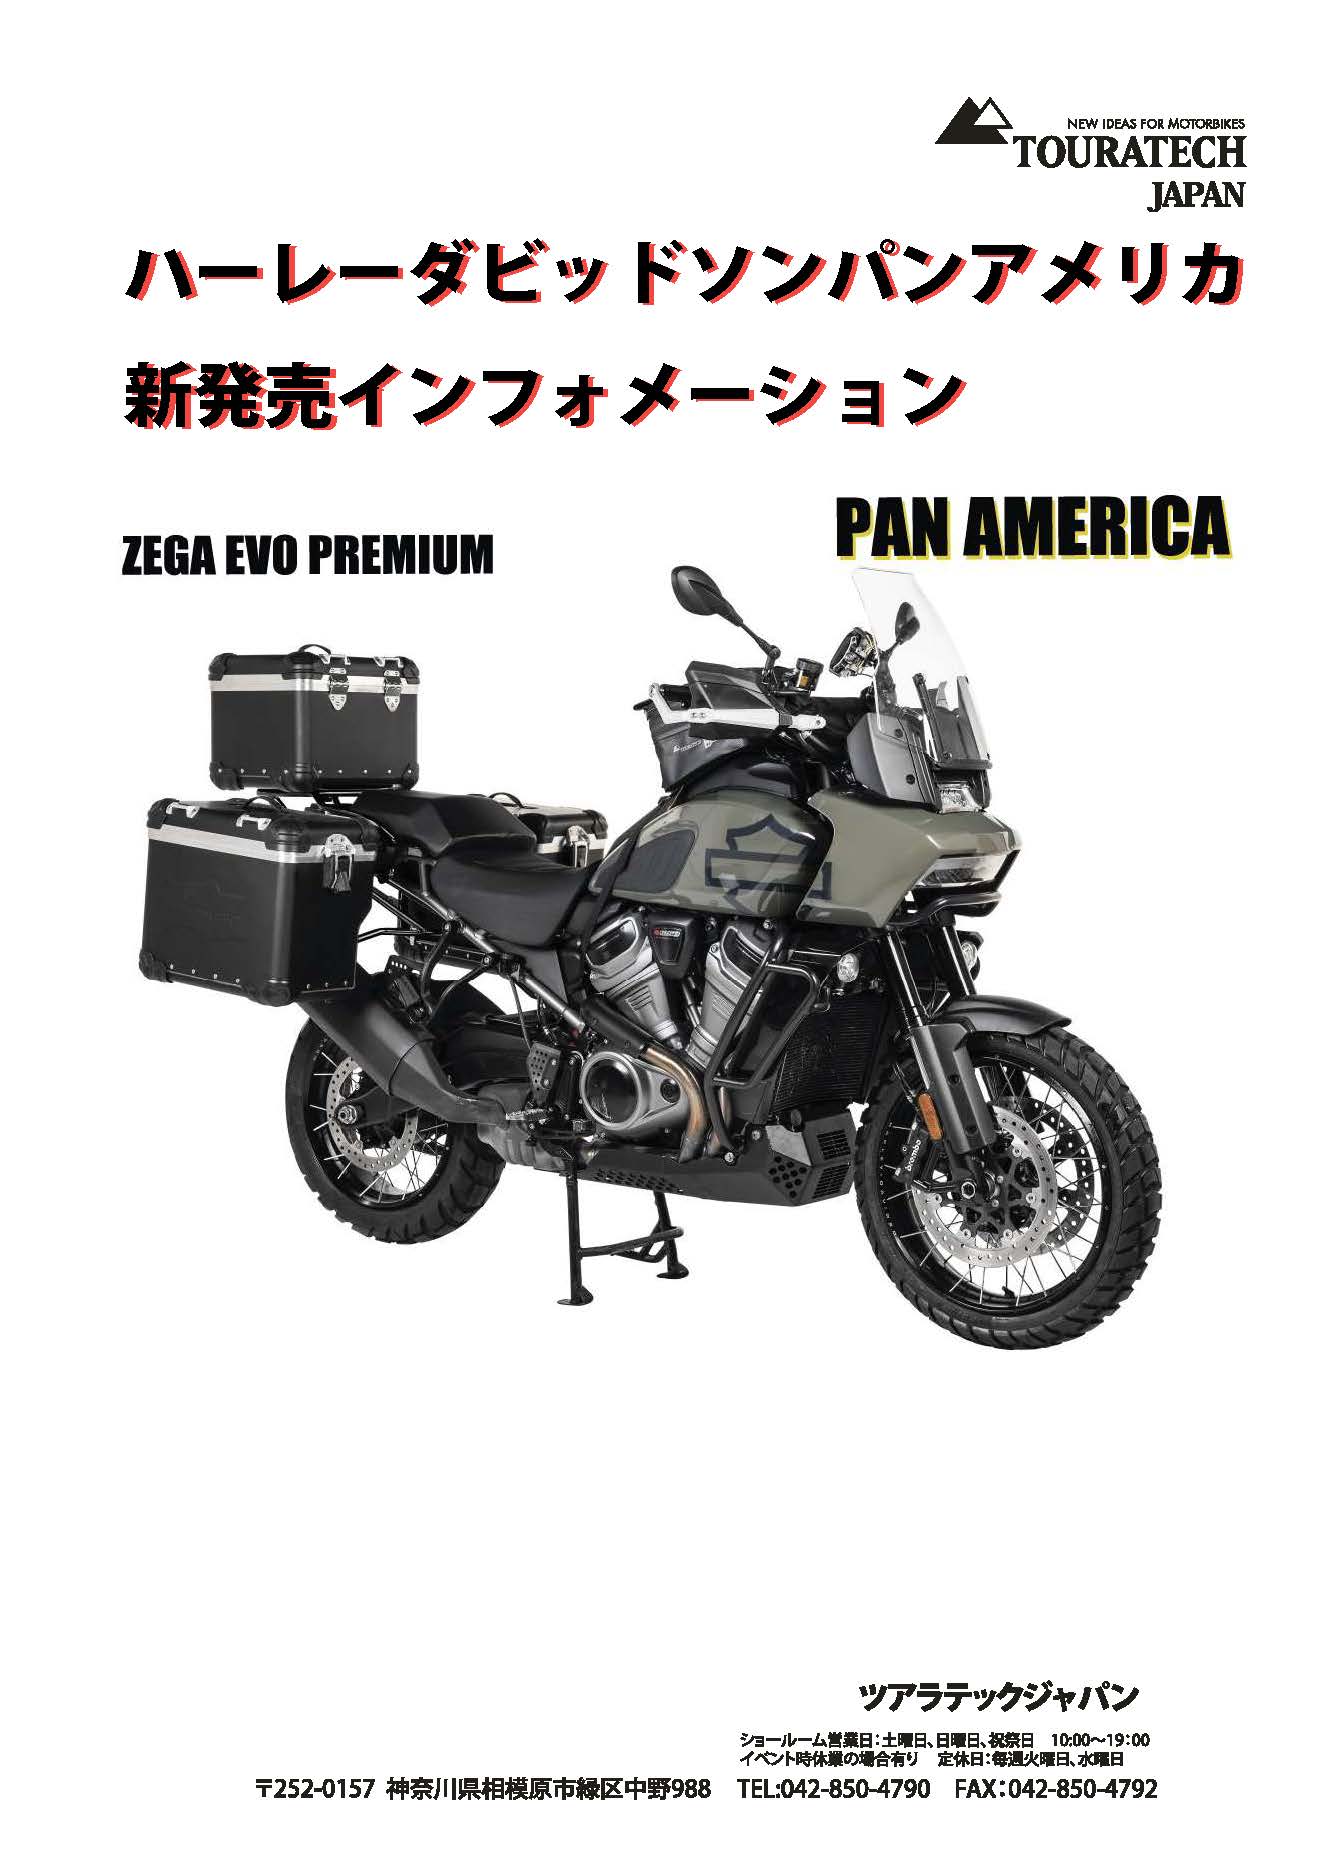 HD Pan America ニューパーツ一覧♪ – TOURATECH JAPAN